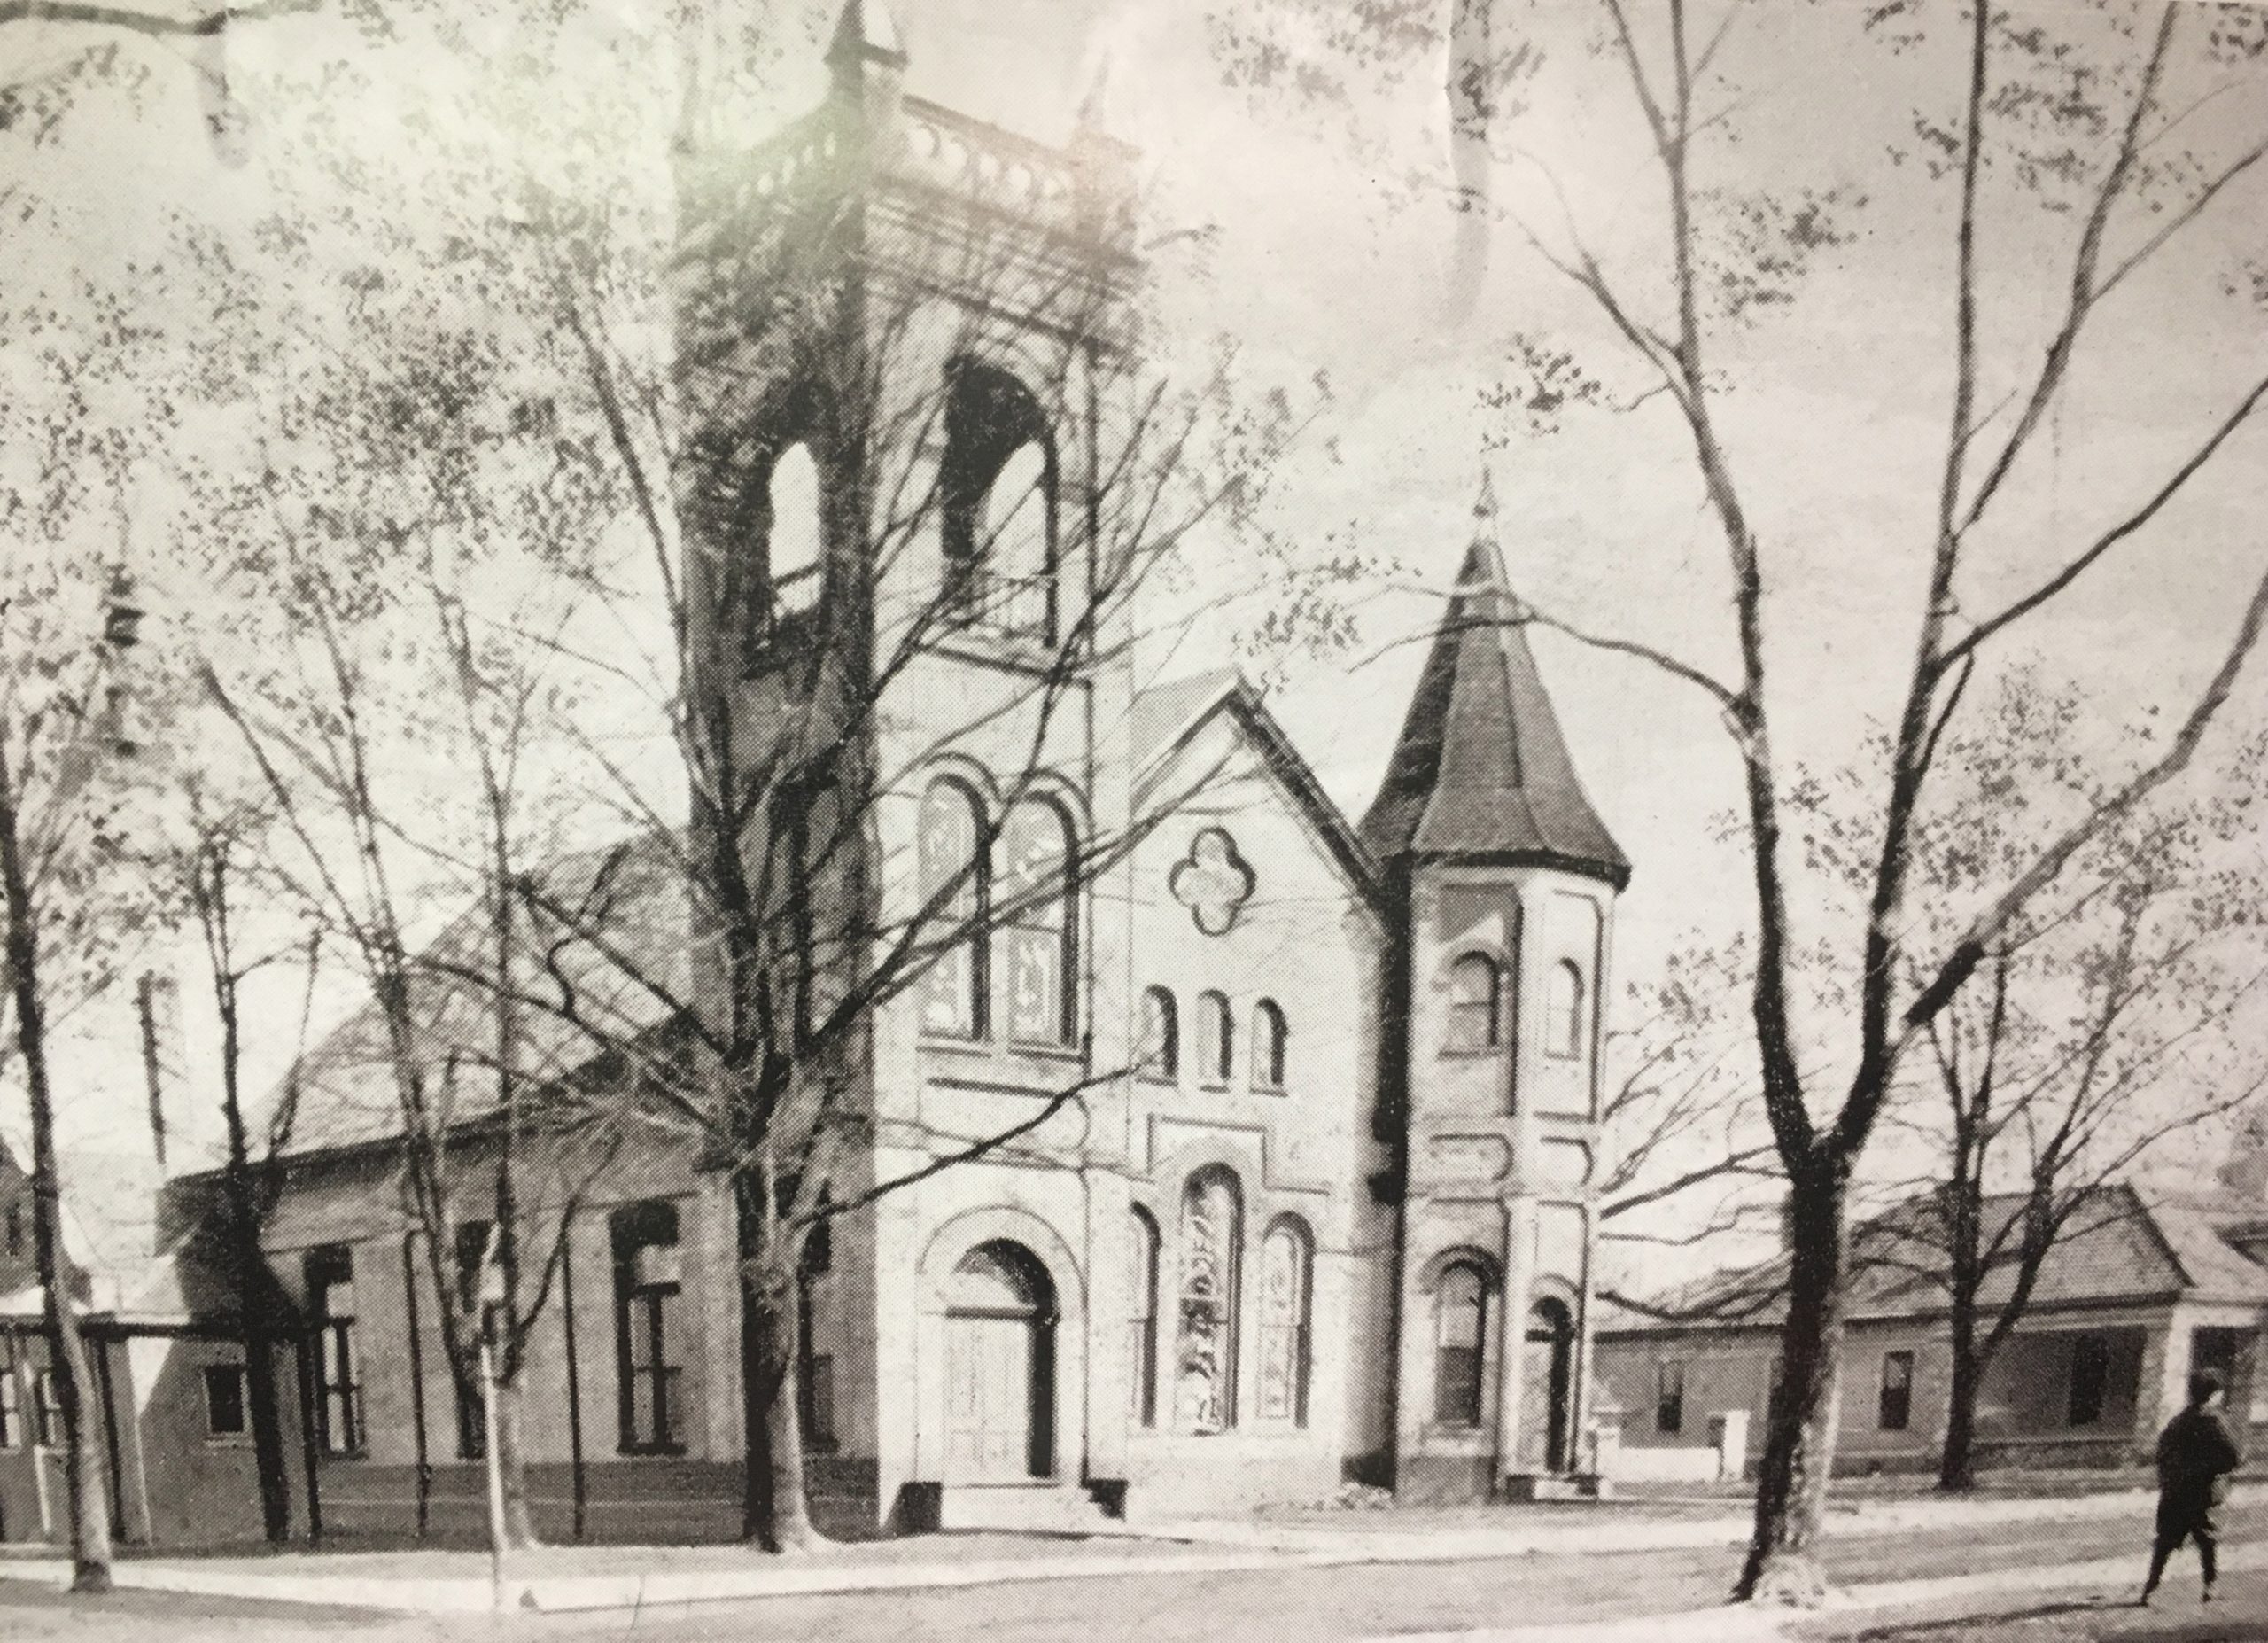 Historic Image of First Presbyterian Church of Cartersville